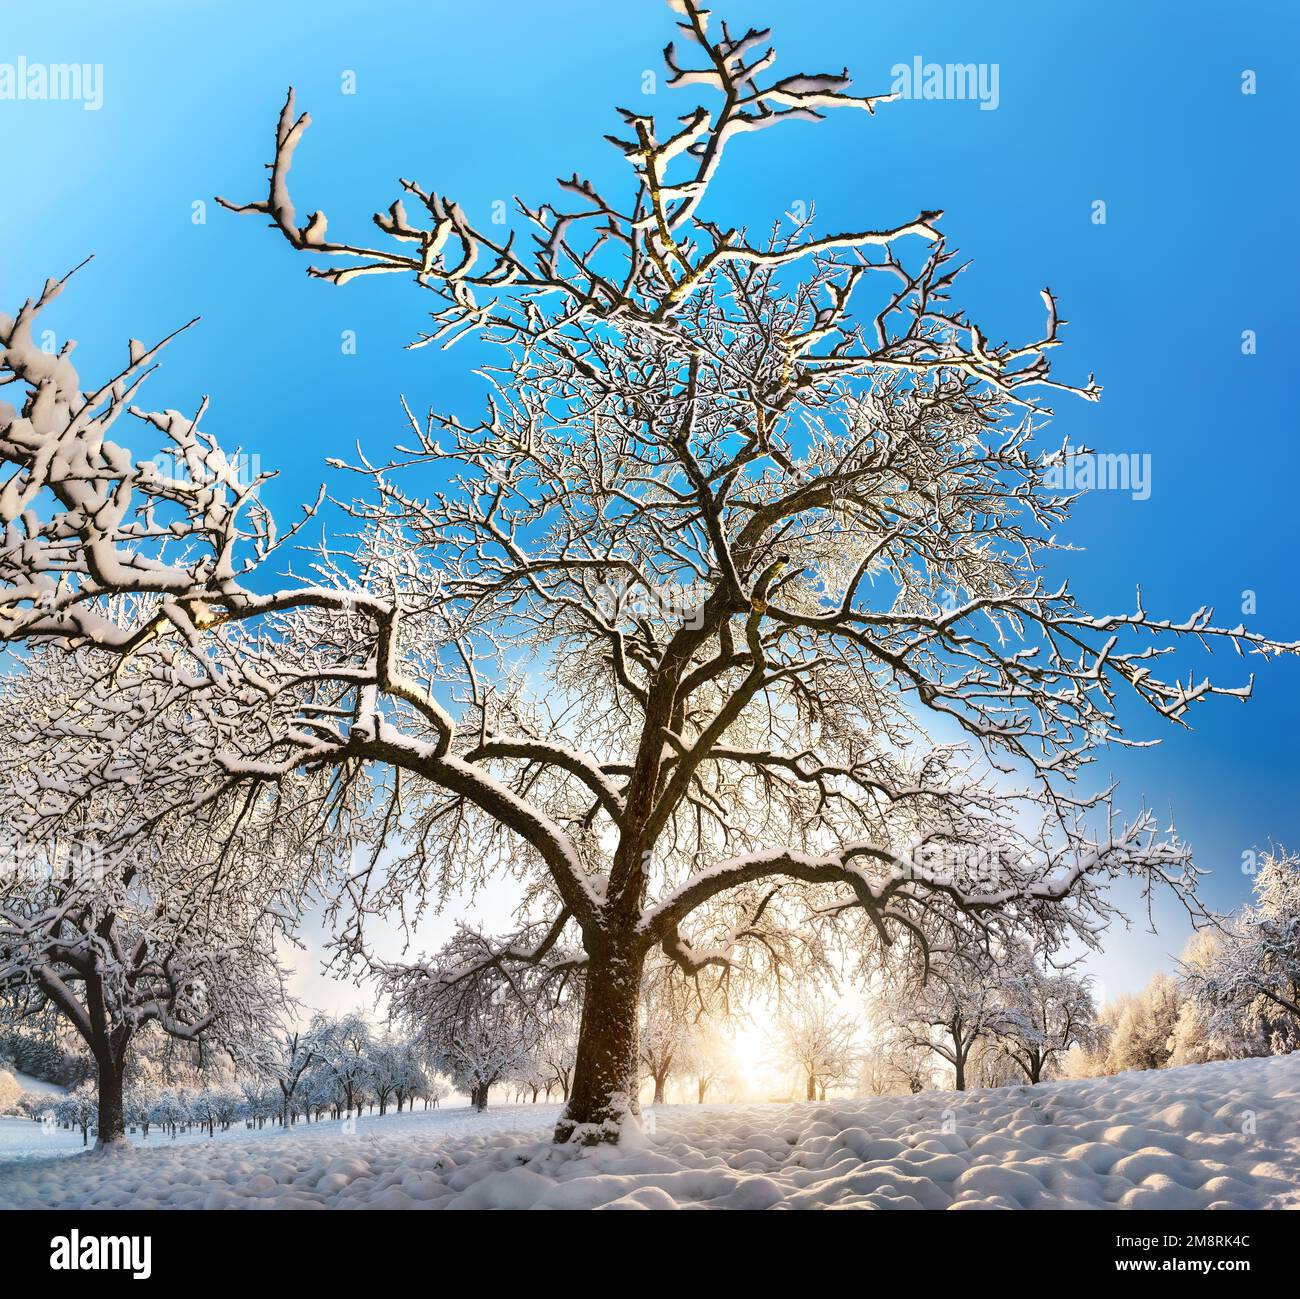 Snow Sun Colors Sky: Over 134,808 Royalty-Free Licensable Stock Photos